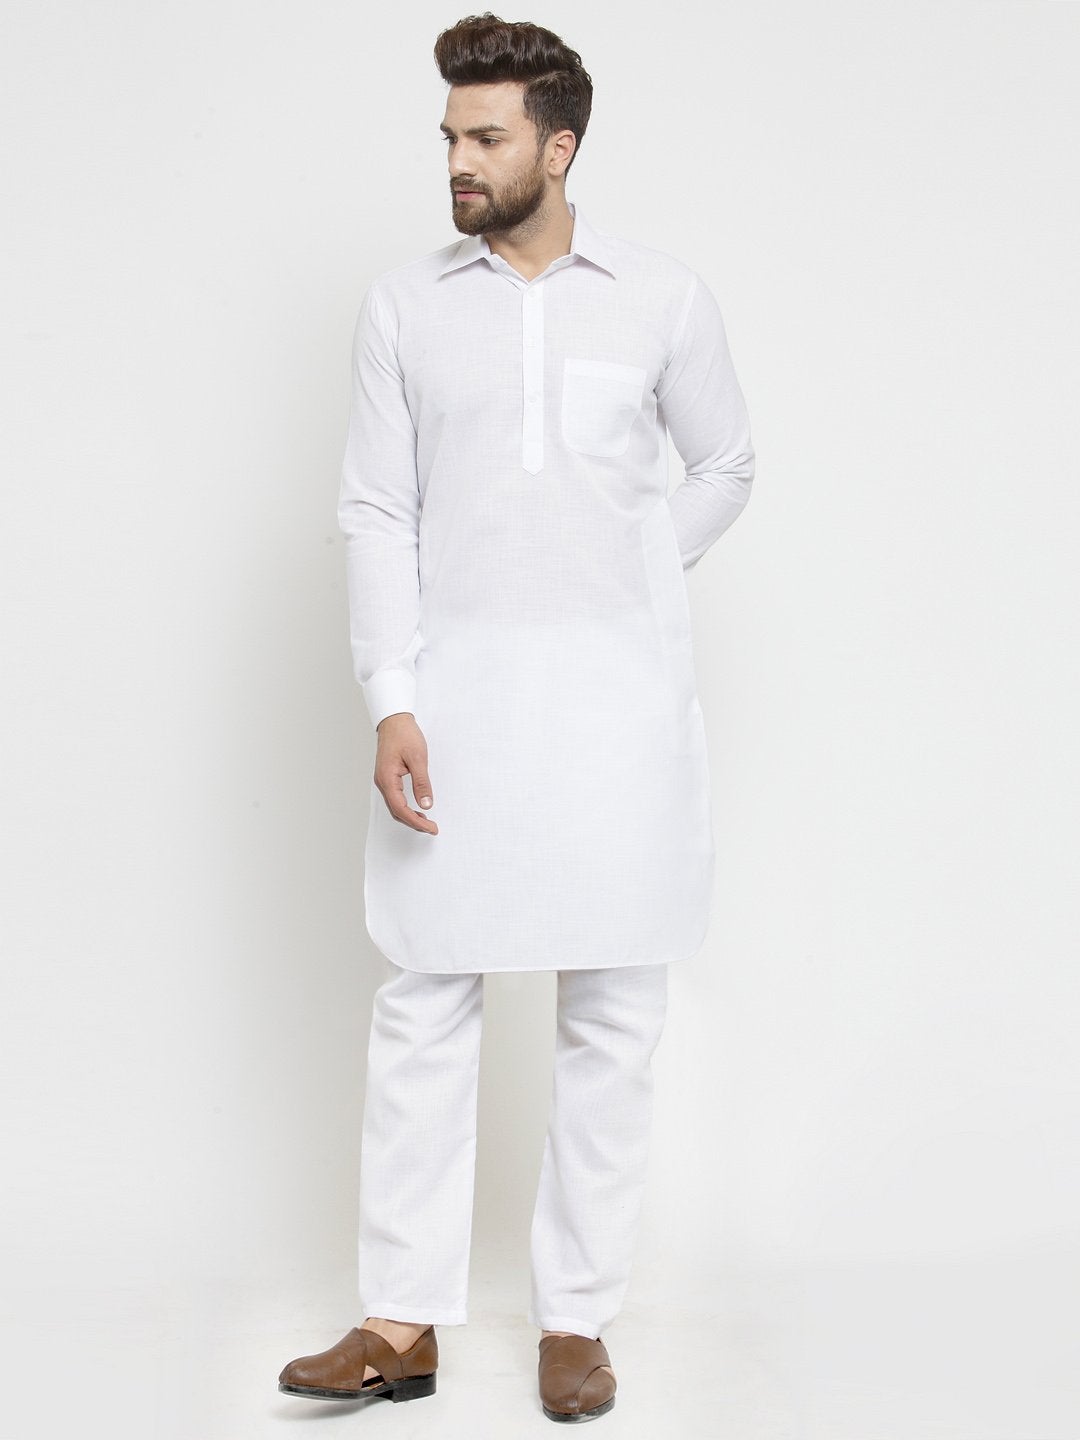 Designer White Pathani Lenin Kurta With Aligarh Pajama By Treemoda